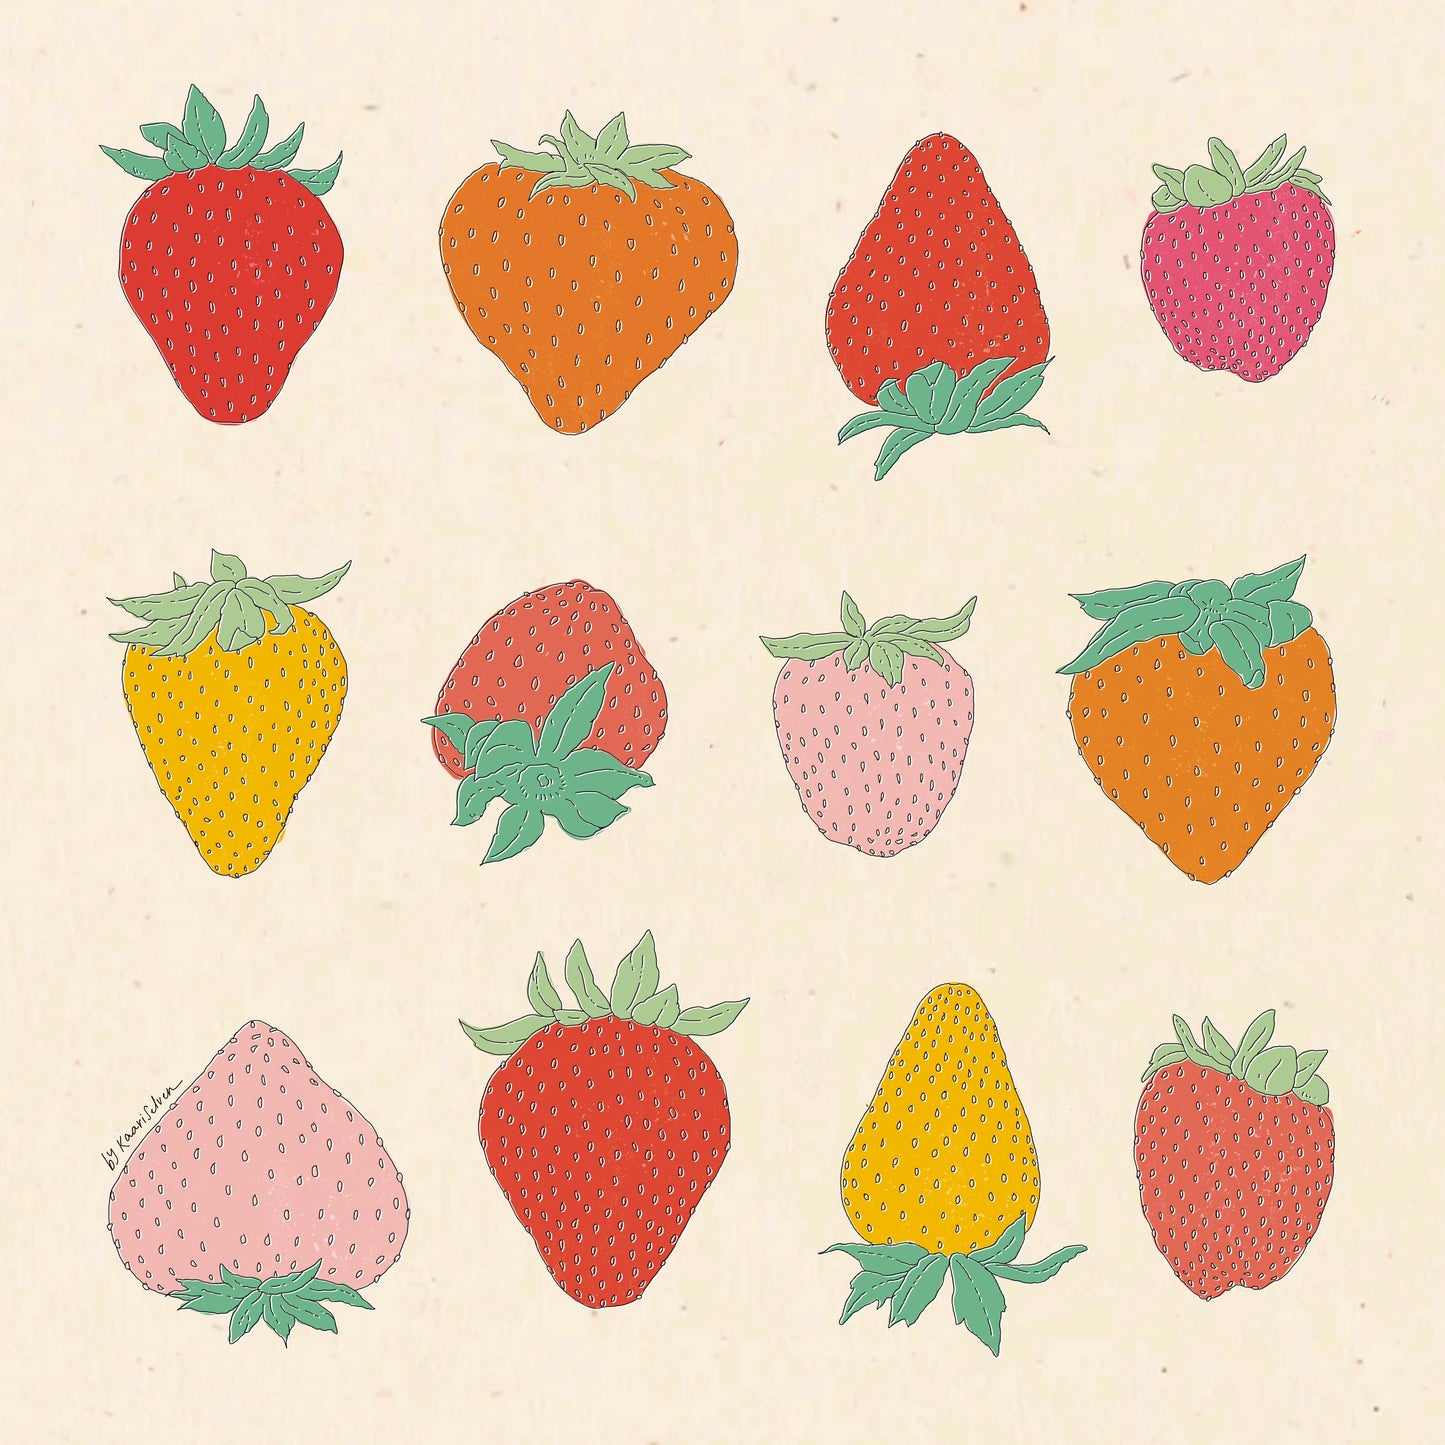 Just Strawberries Art Print